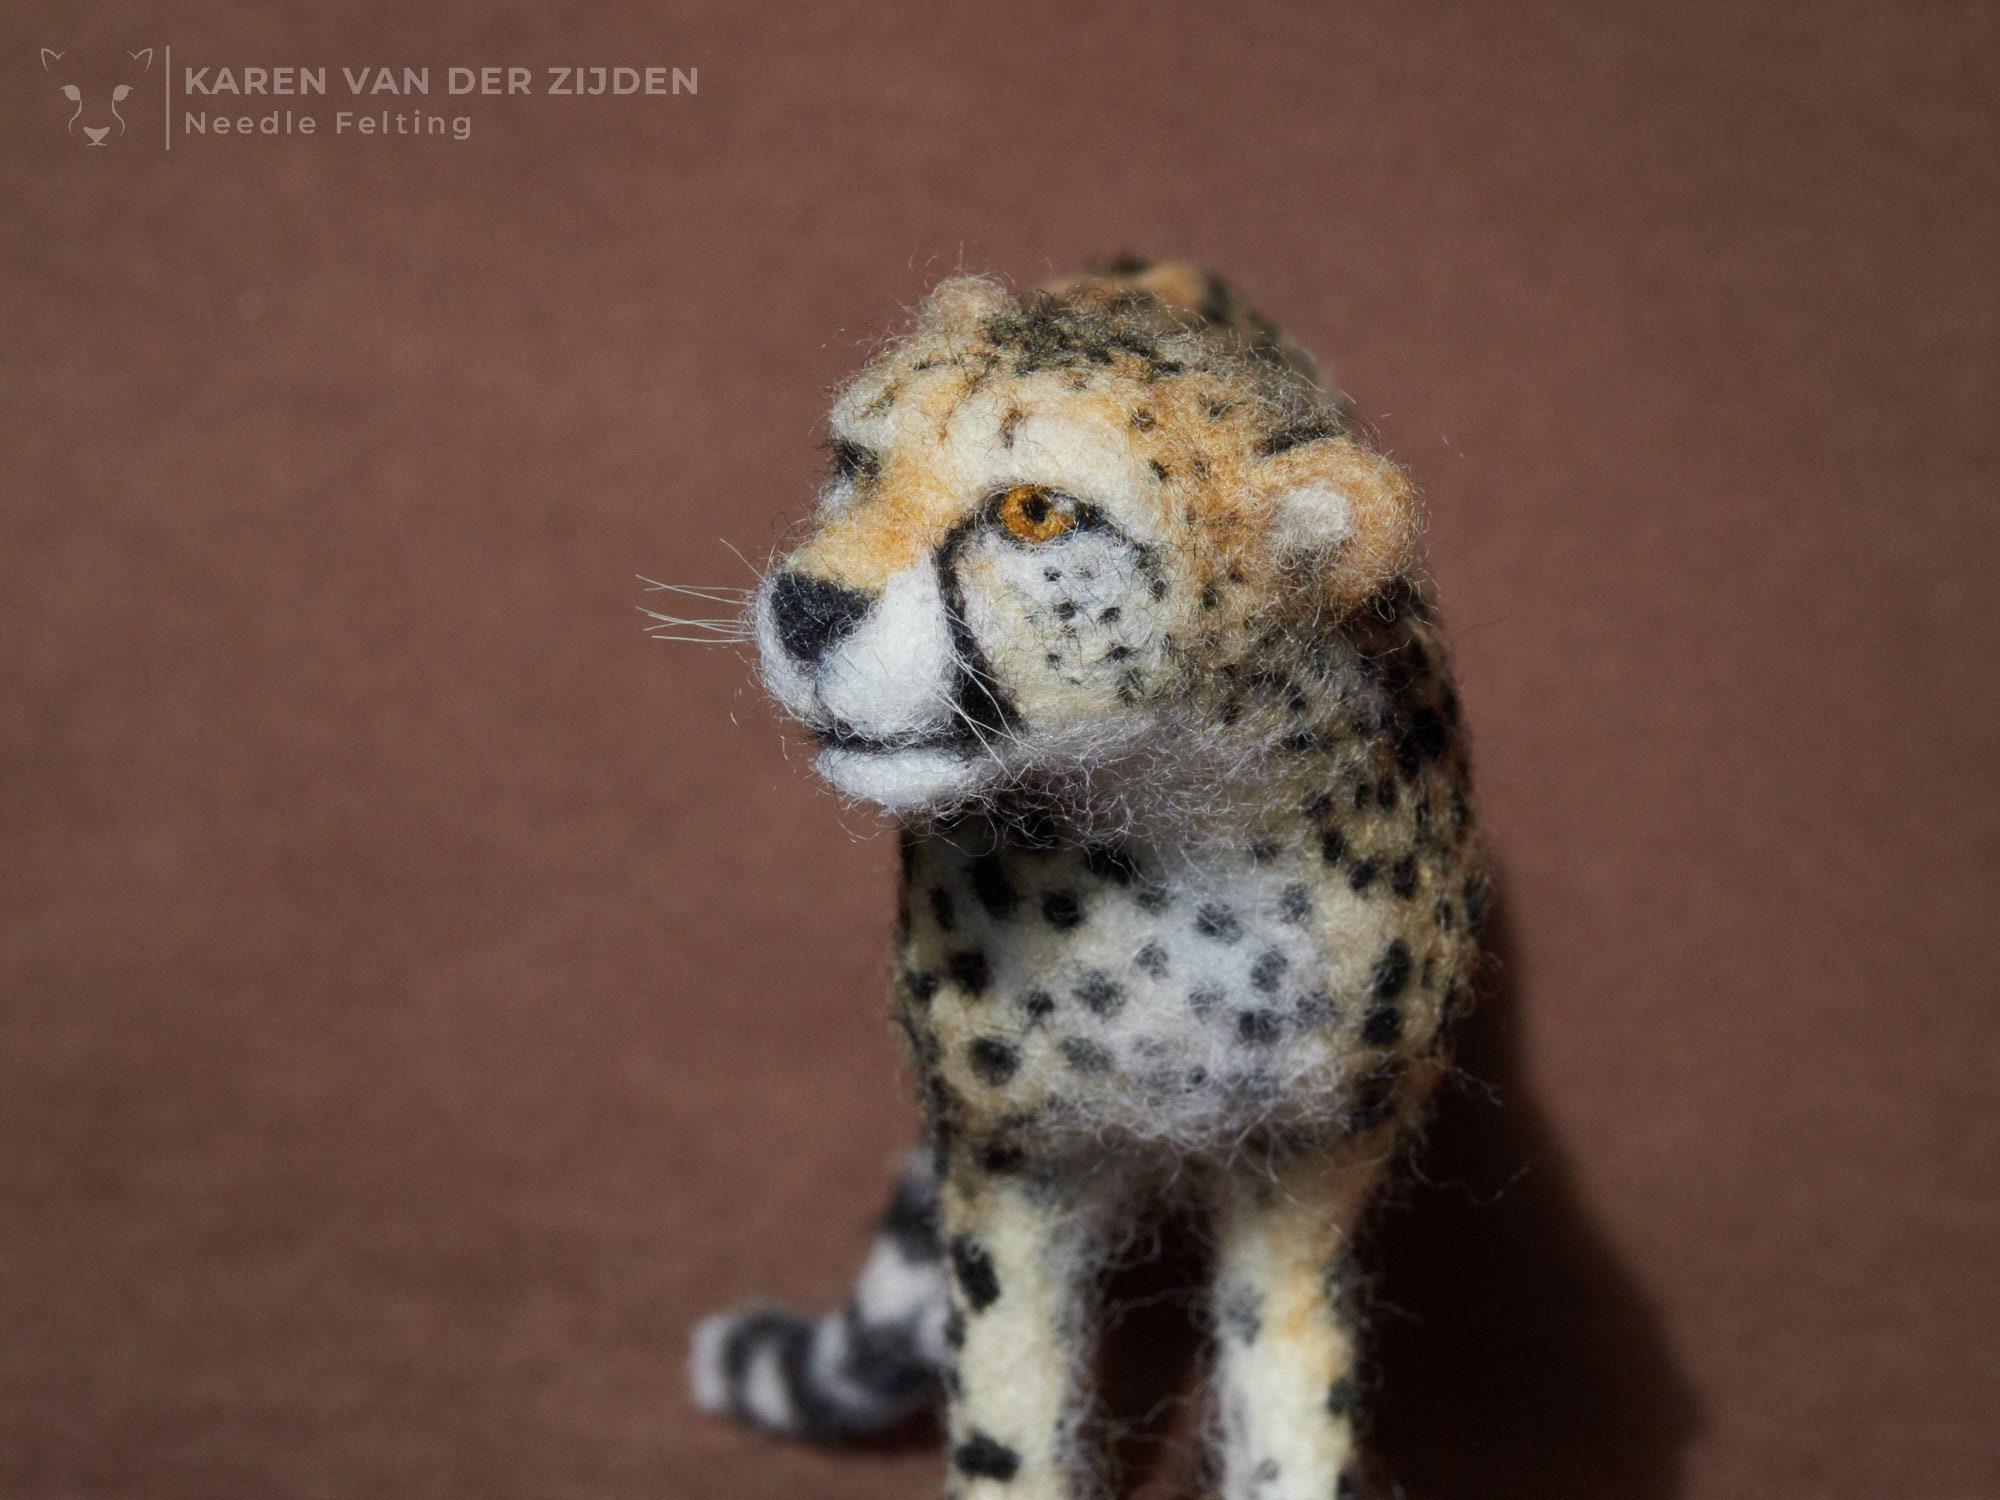 Cheetah Figurine -  Canada